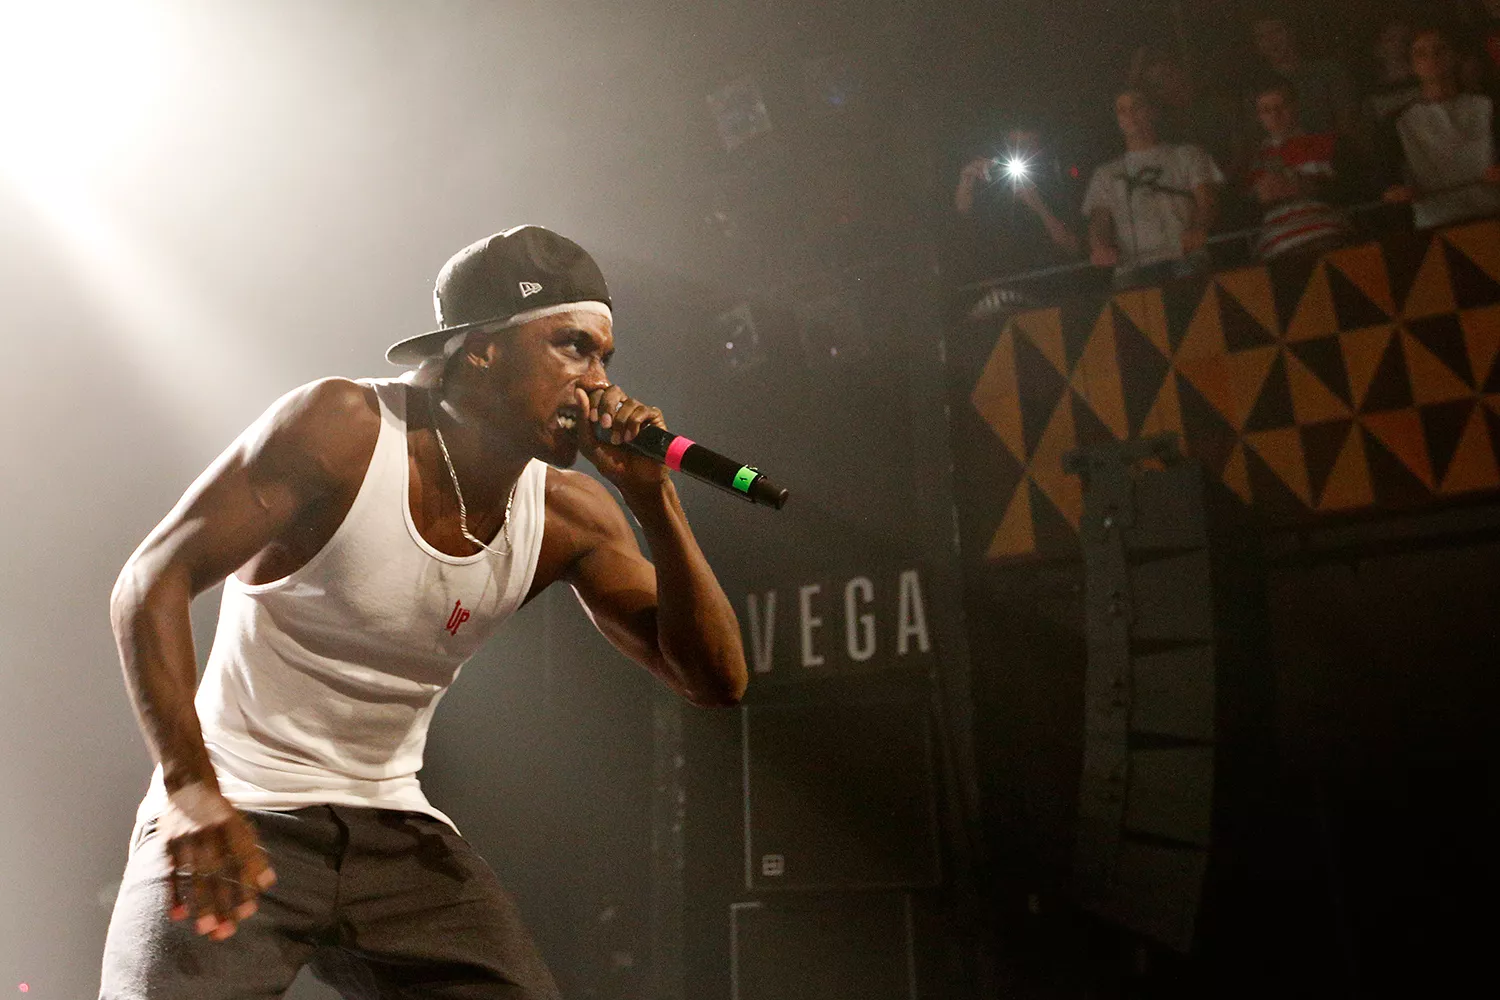 Den kontroversielle rapper Hopsin gæster Vega til februar